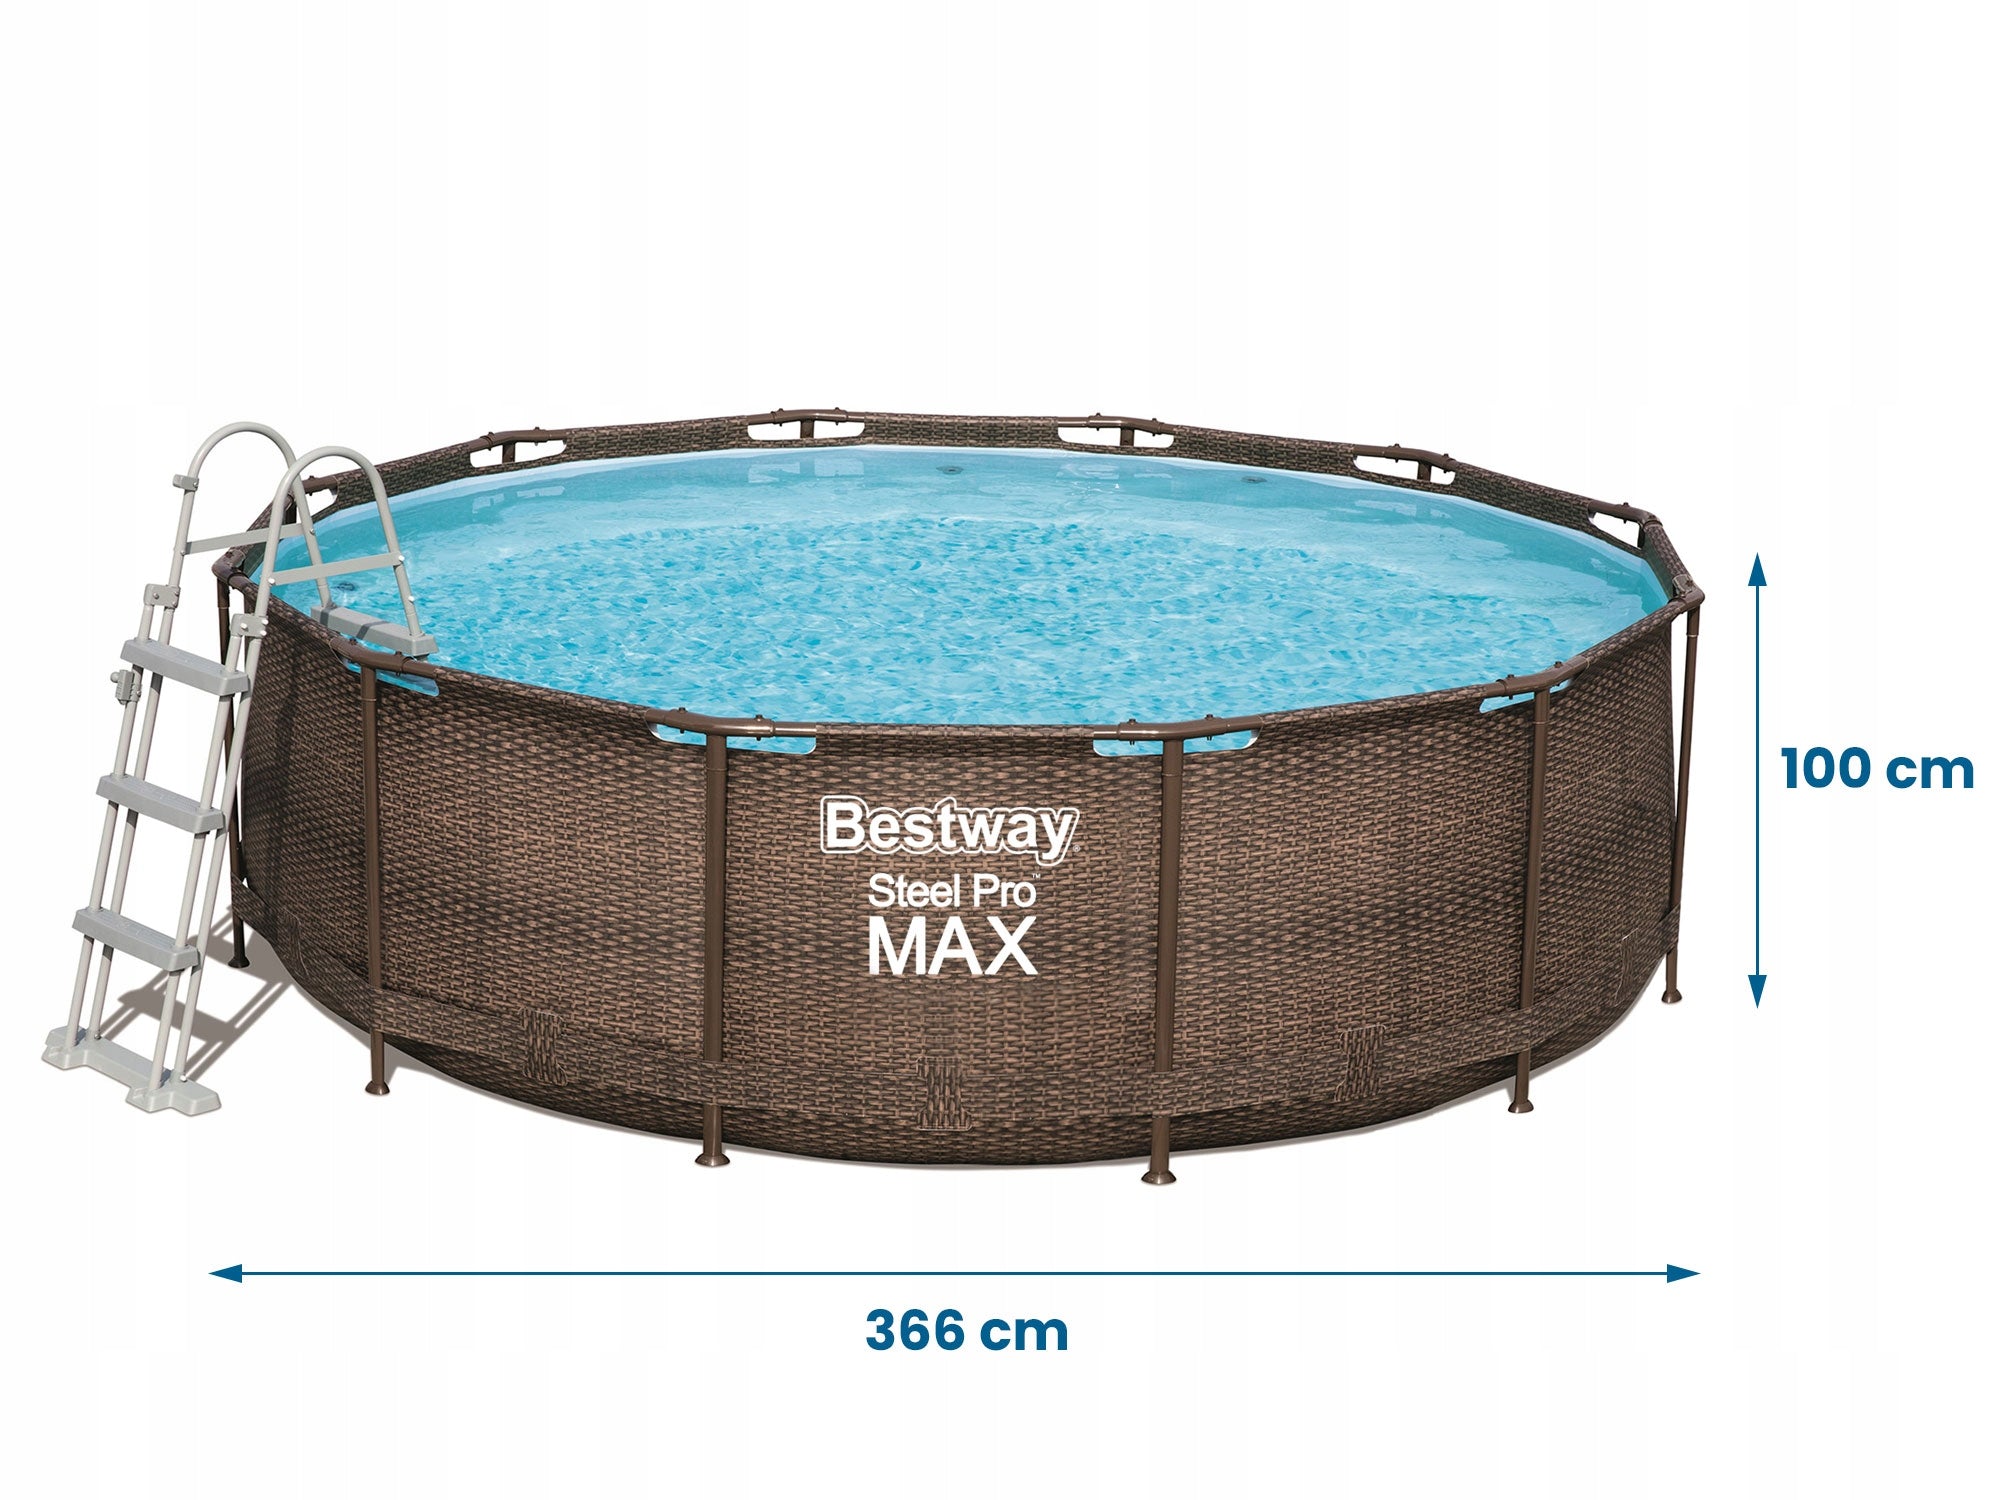 Bestway STEEL PRO MAX baseinas 366 x 366 cm 9150 litrai